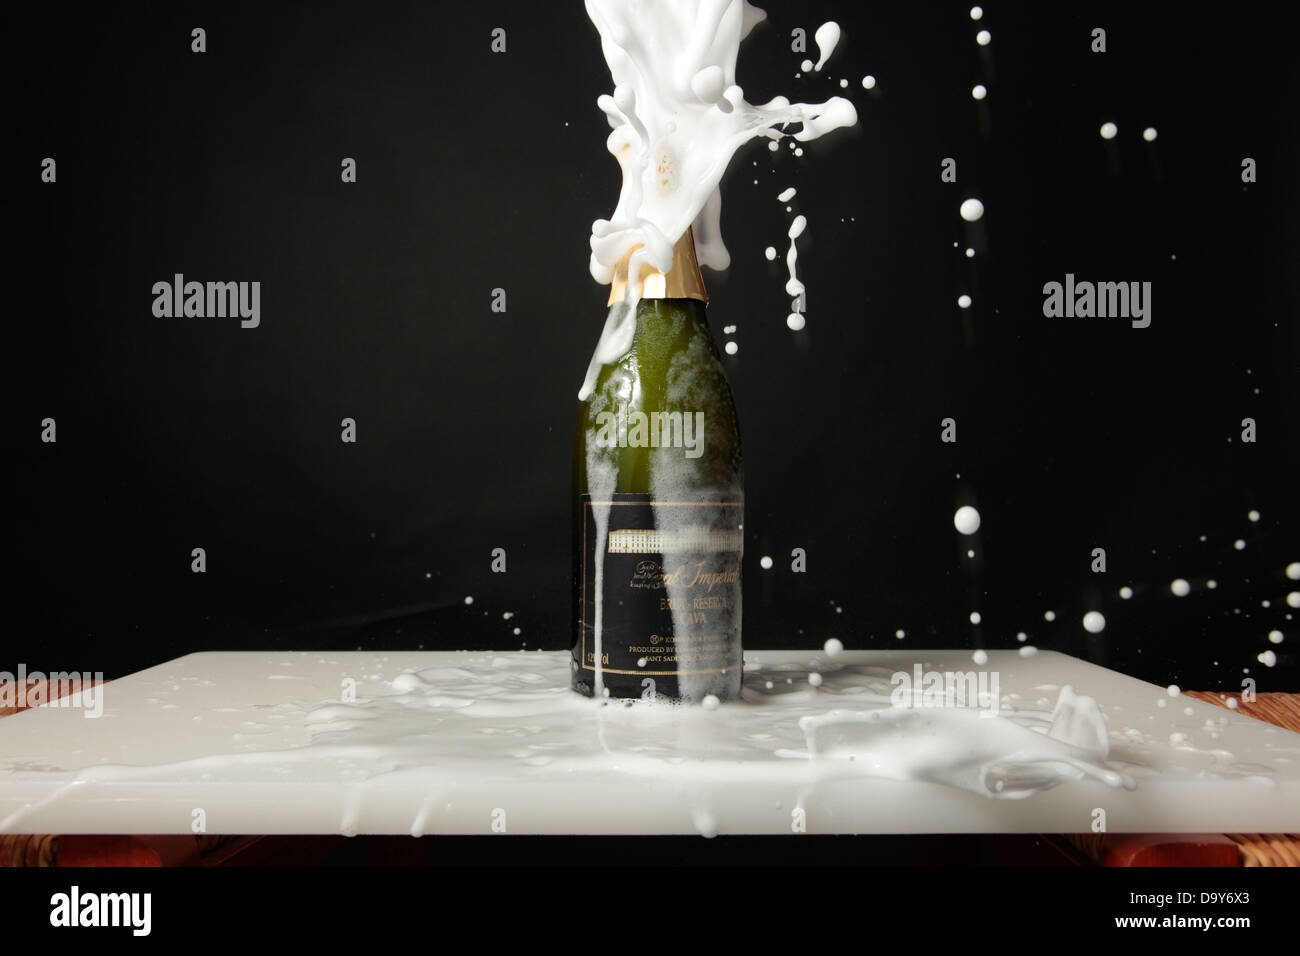 Cava, champagne or wine bottle splash on black background Stock Photo